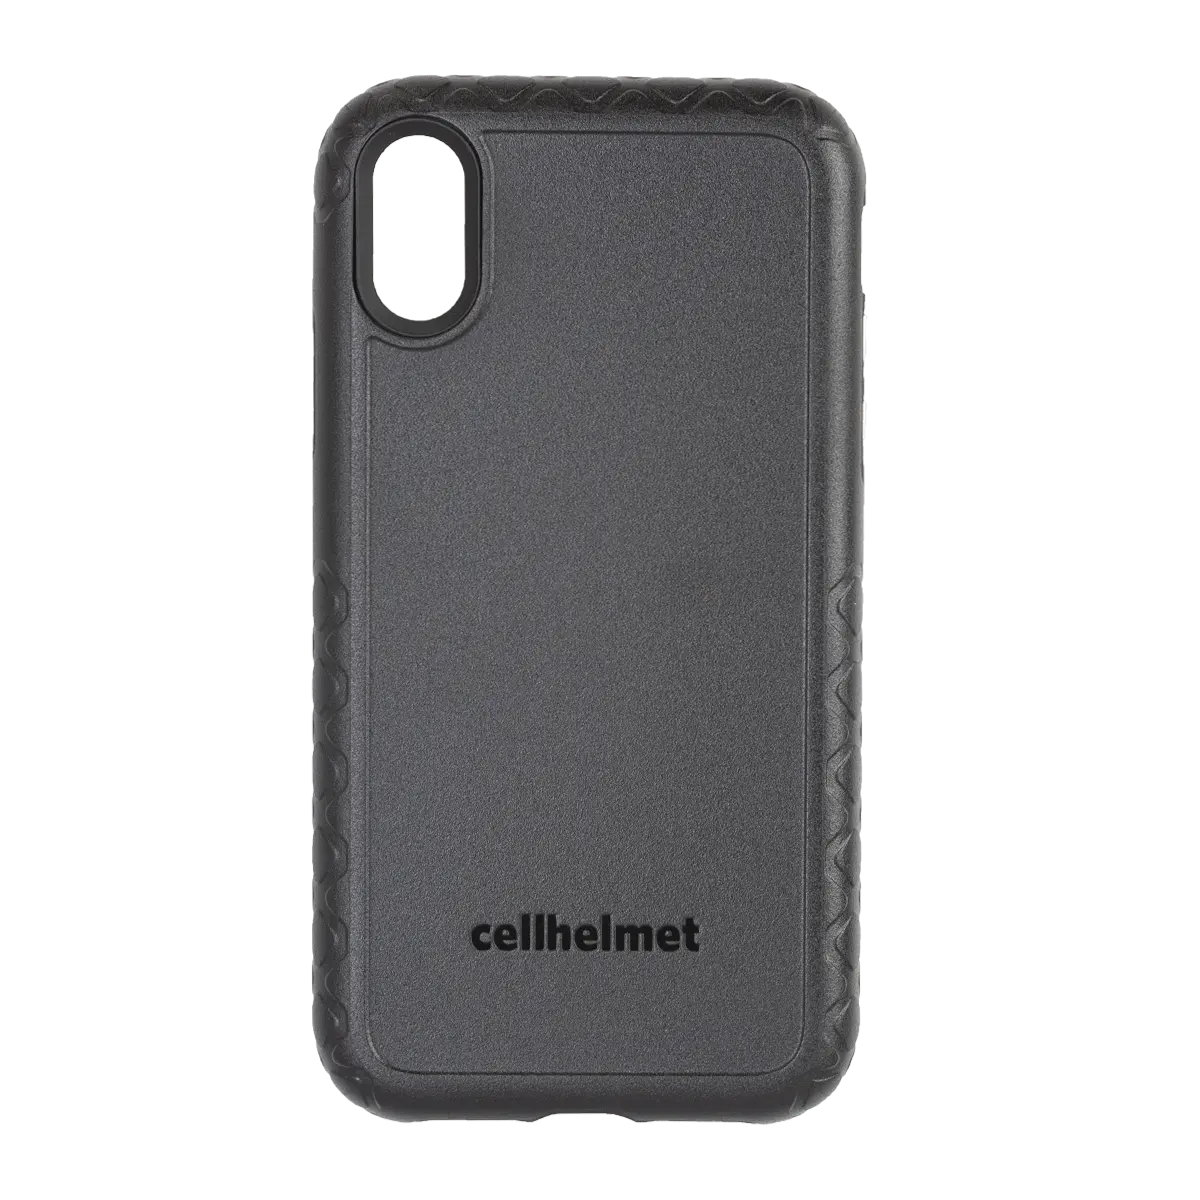 Black cellhelmet Customizable Case for iPhone XS